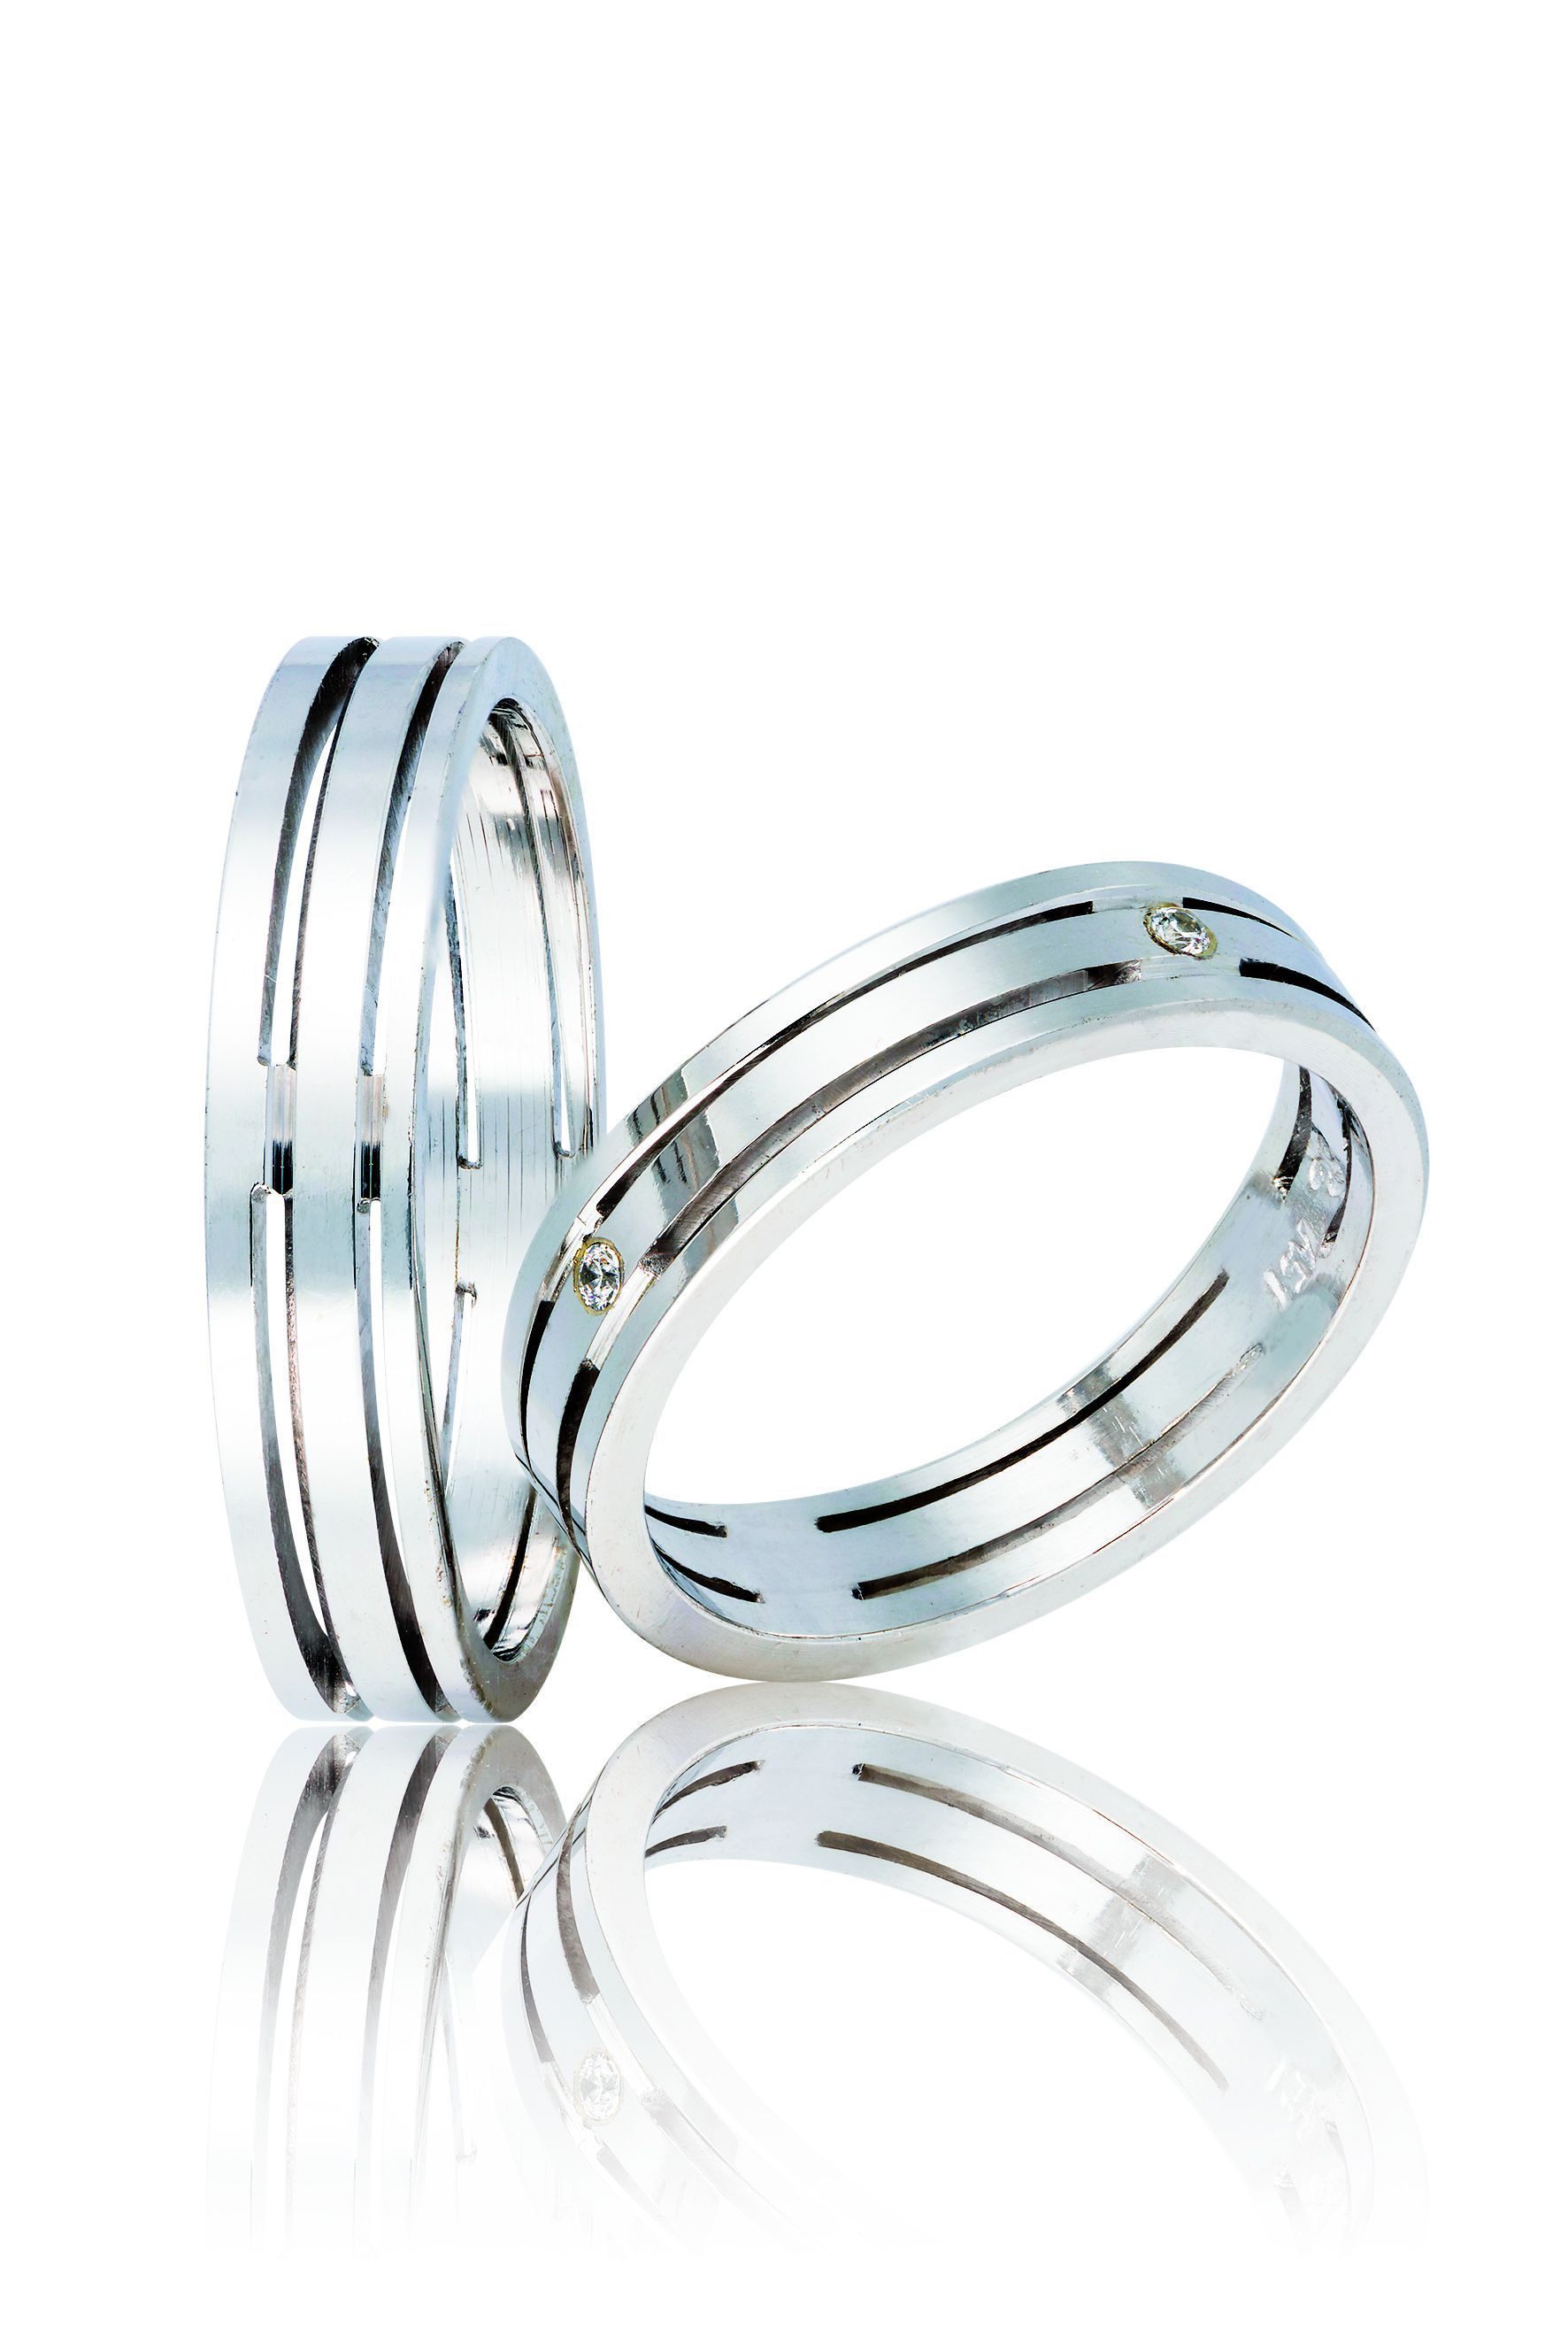 White gold wedding rings 4mm (code 2w)